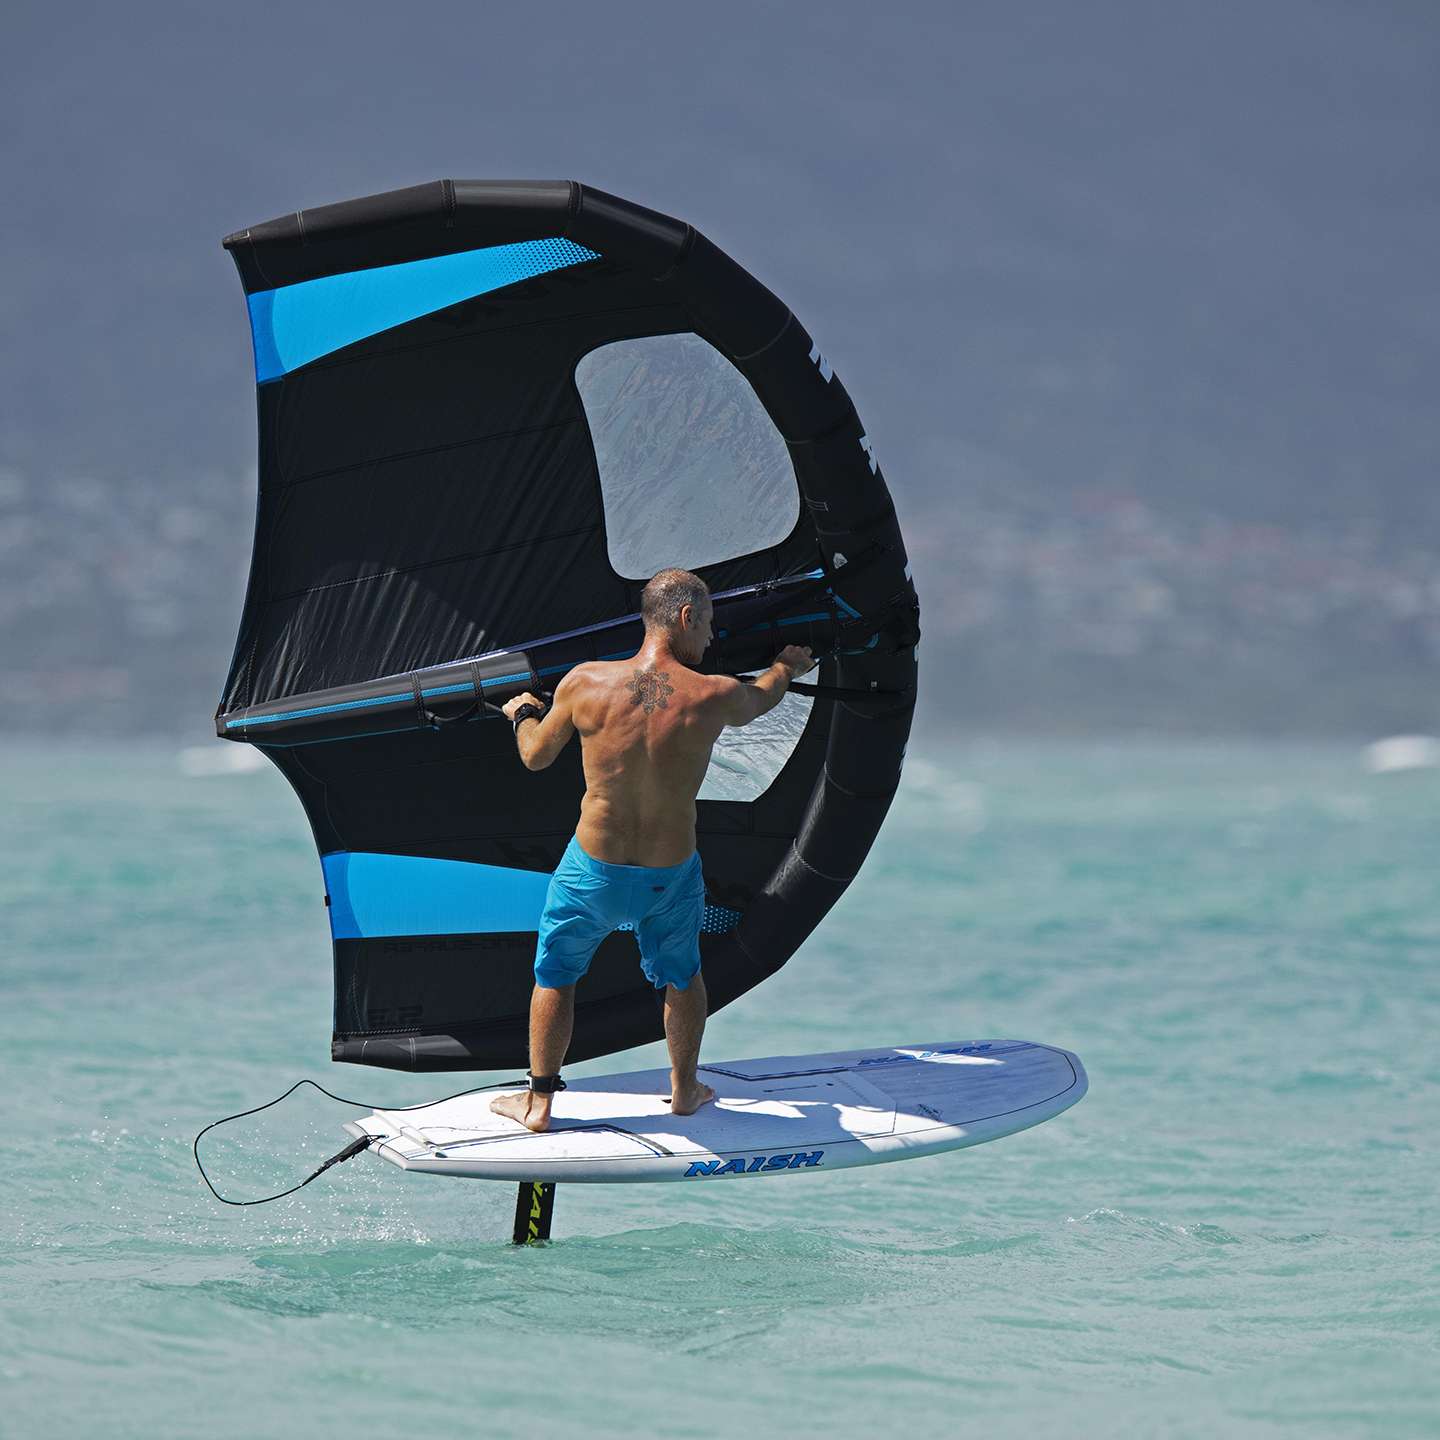 NAISH☆WING SURFER☆Wing Foil☆5.3㎡☆S26☆mk3 | www.jarussi.com.br